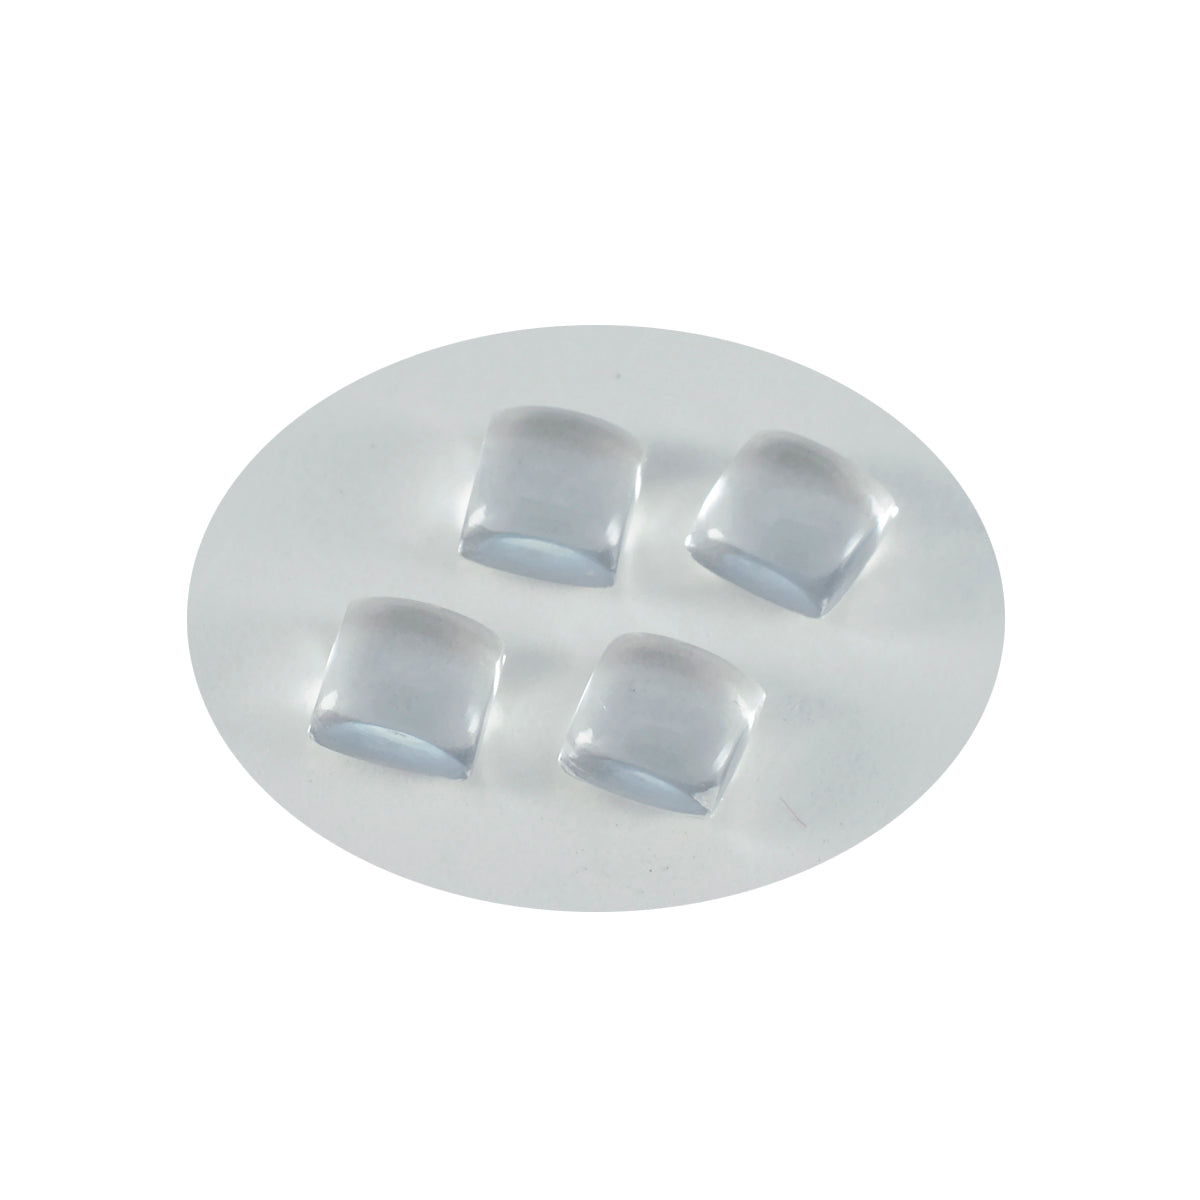 riyogems 1pc ホワイト クリスタル クォーツ カボション 9x9 mm 正方形の形状の素敵な品質のルース宝石